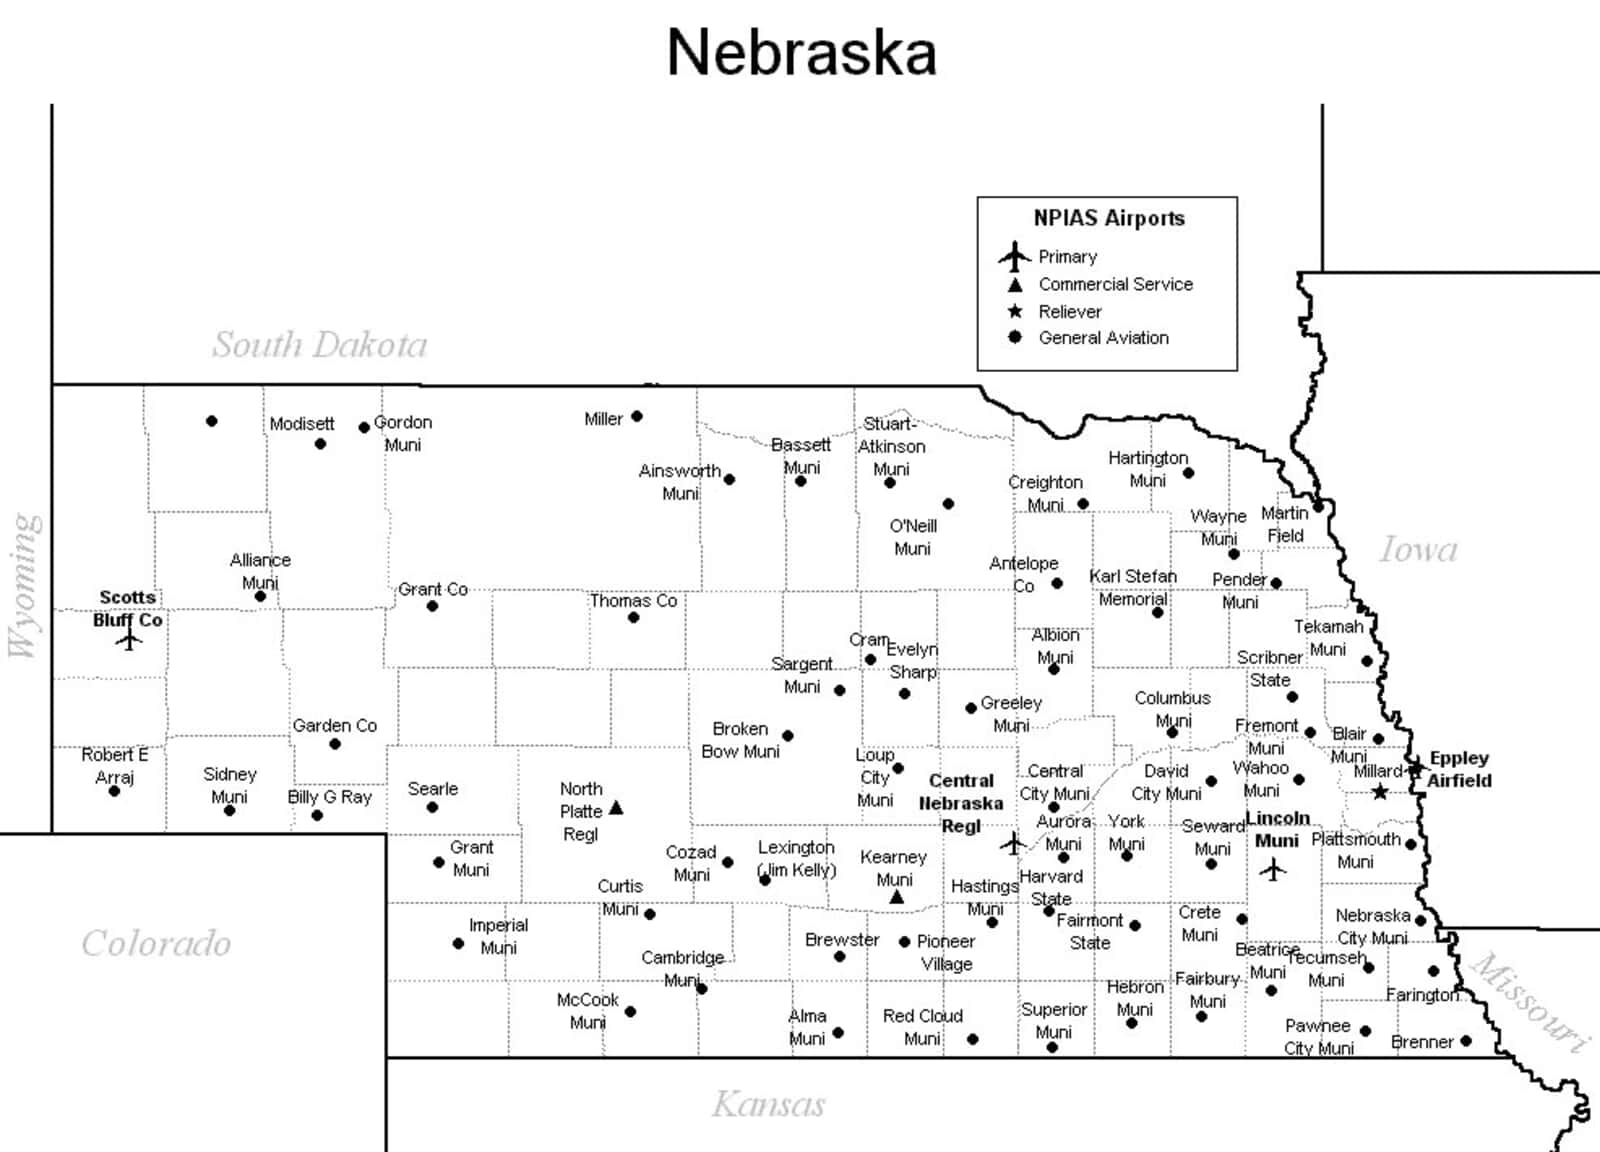 Nebraska Airport Map Nebraska Airports